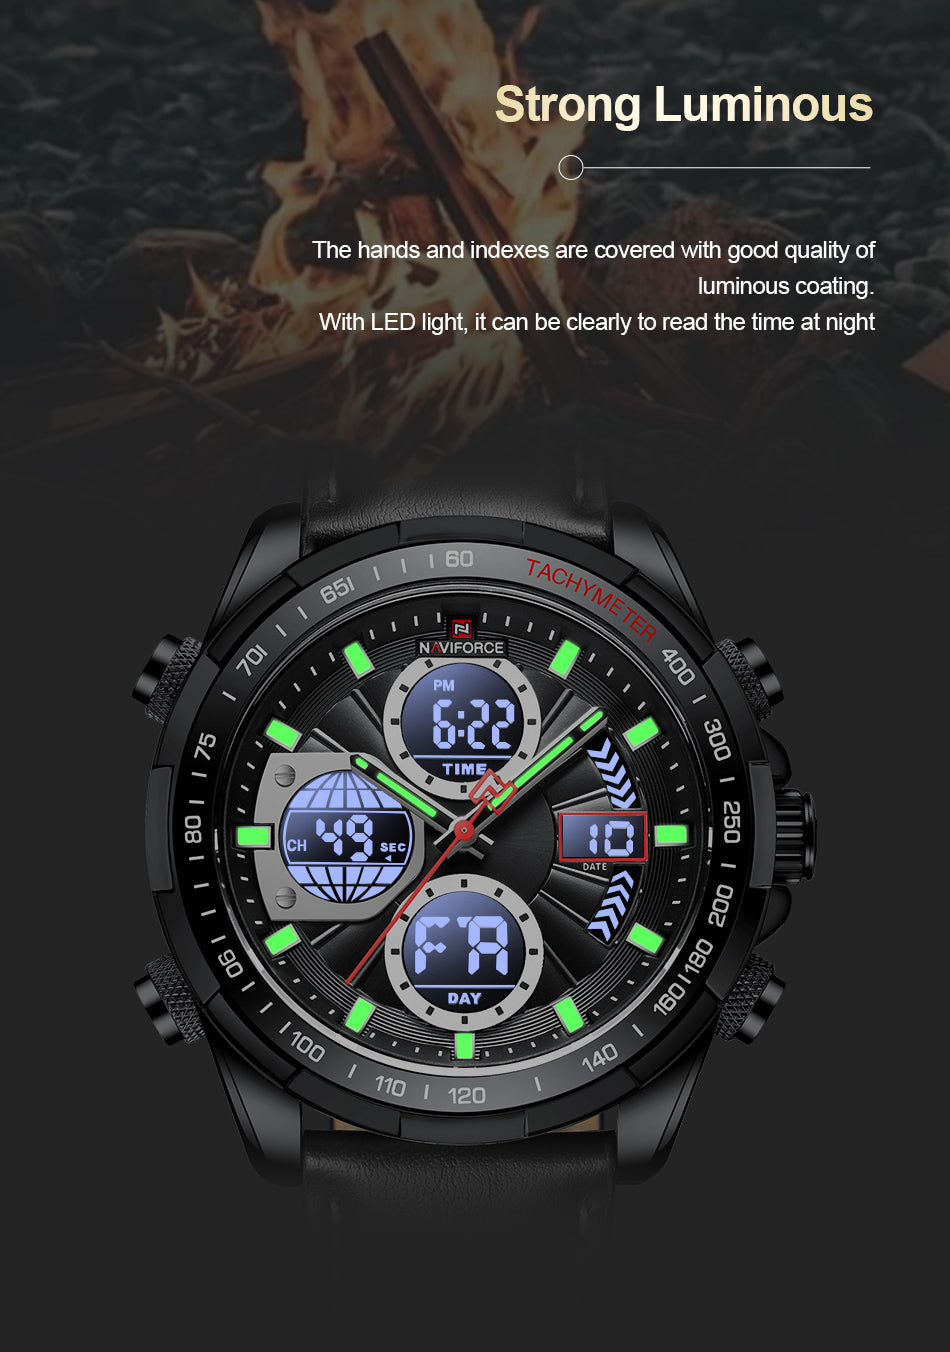 Naviforce 9197 Electron Men Leather Watch - Black